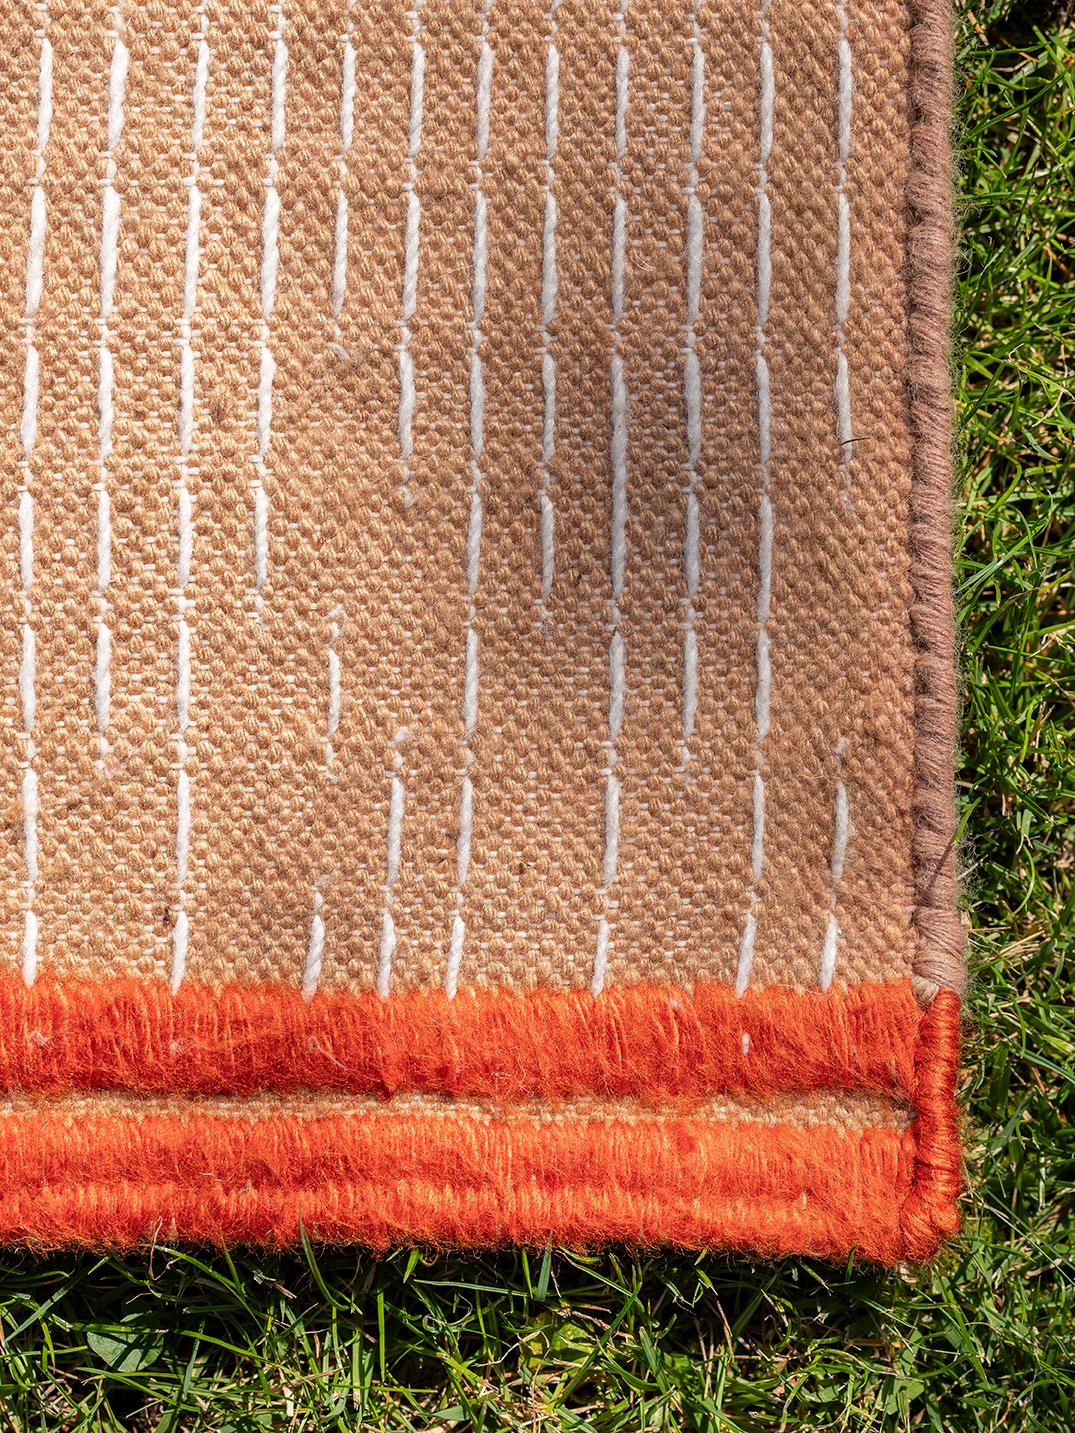 Modern Handwoven Polypropylene Outdoor Rug Carpet Orange&Makeup Zíngara In New Condition For Sale In Madrid, ES